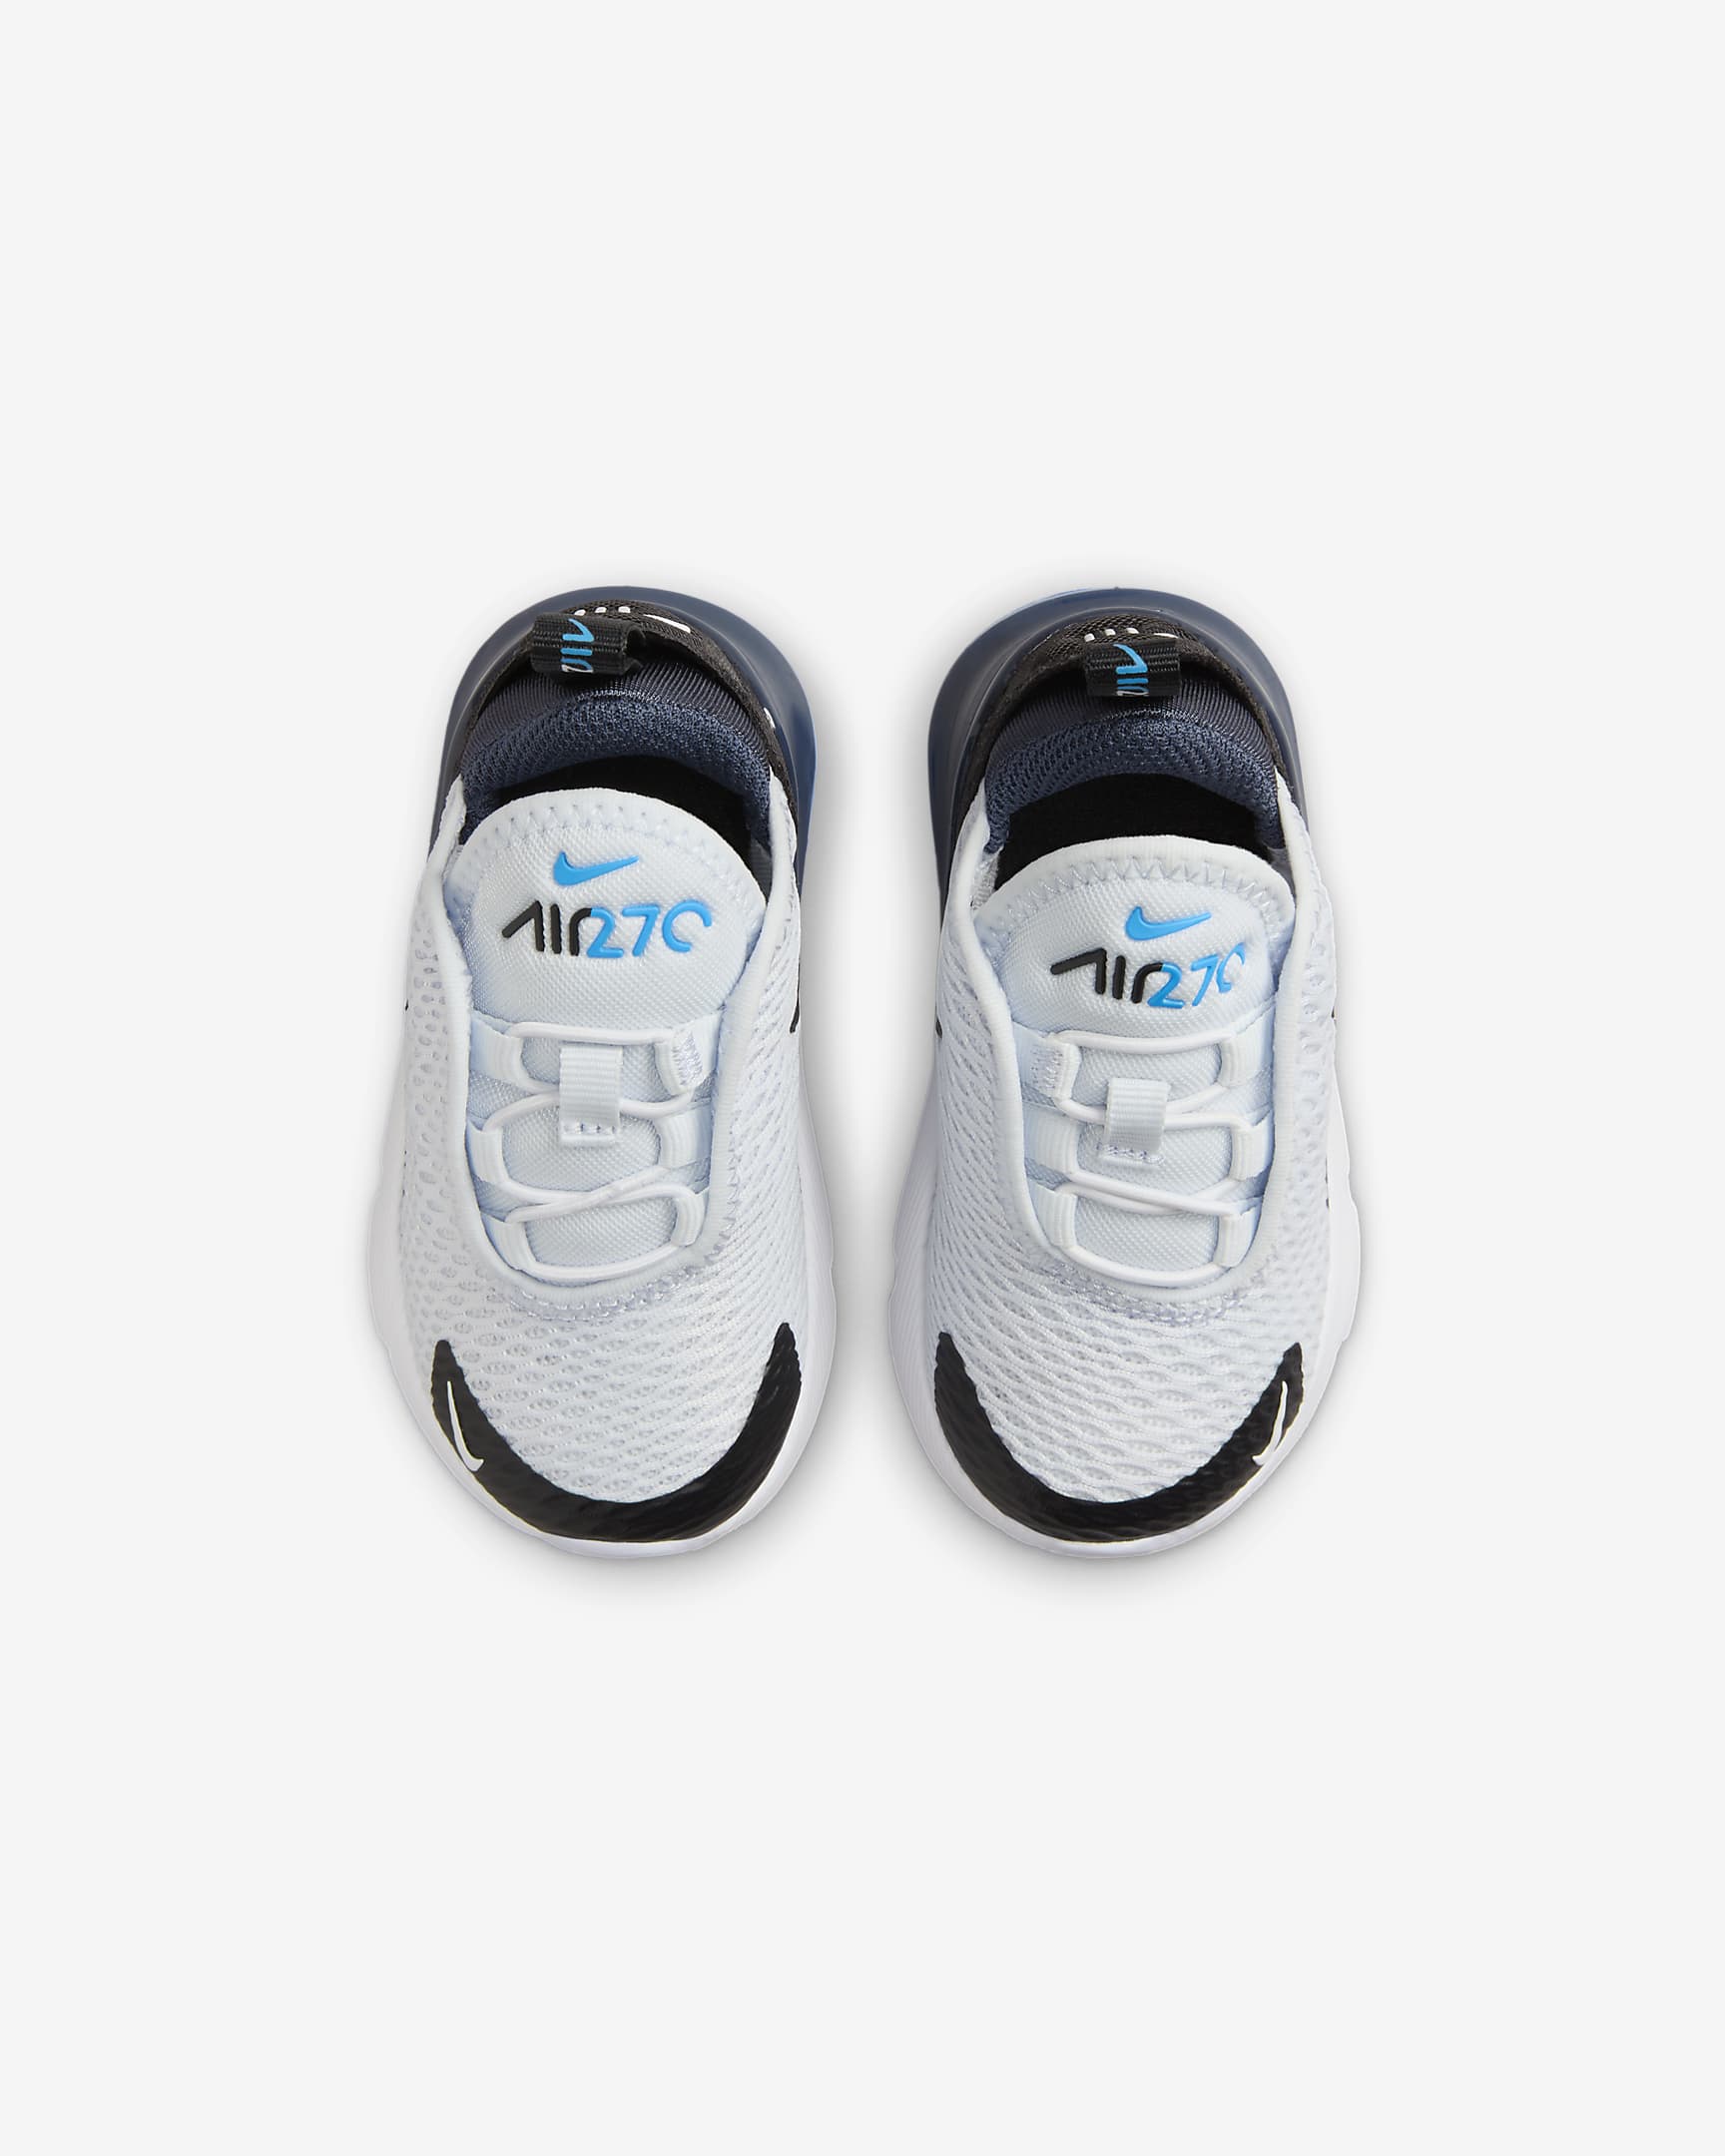 Nike Air Max 270 Baby and Toddler Shoe - Football Grey/Thunder Blue/Photo Blue/Black